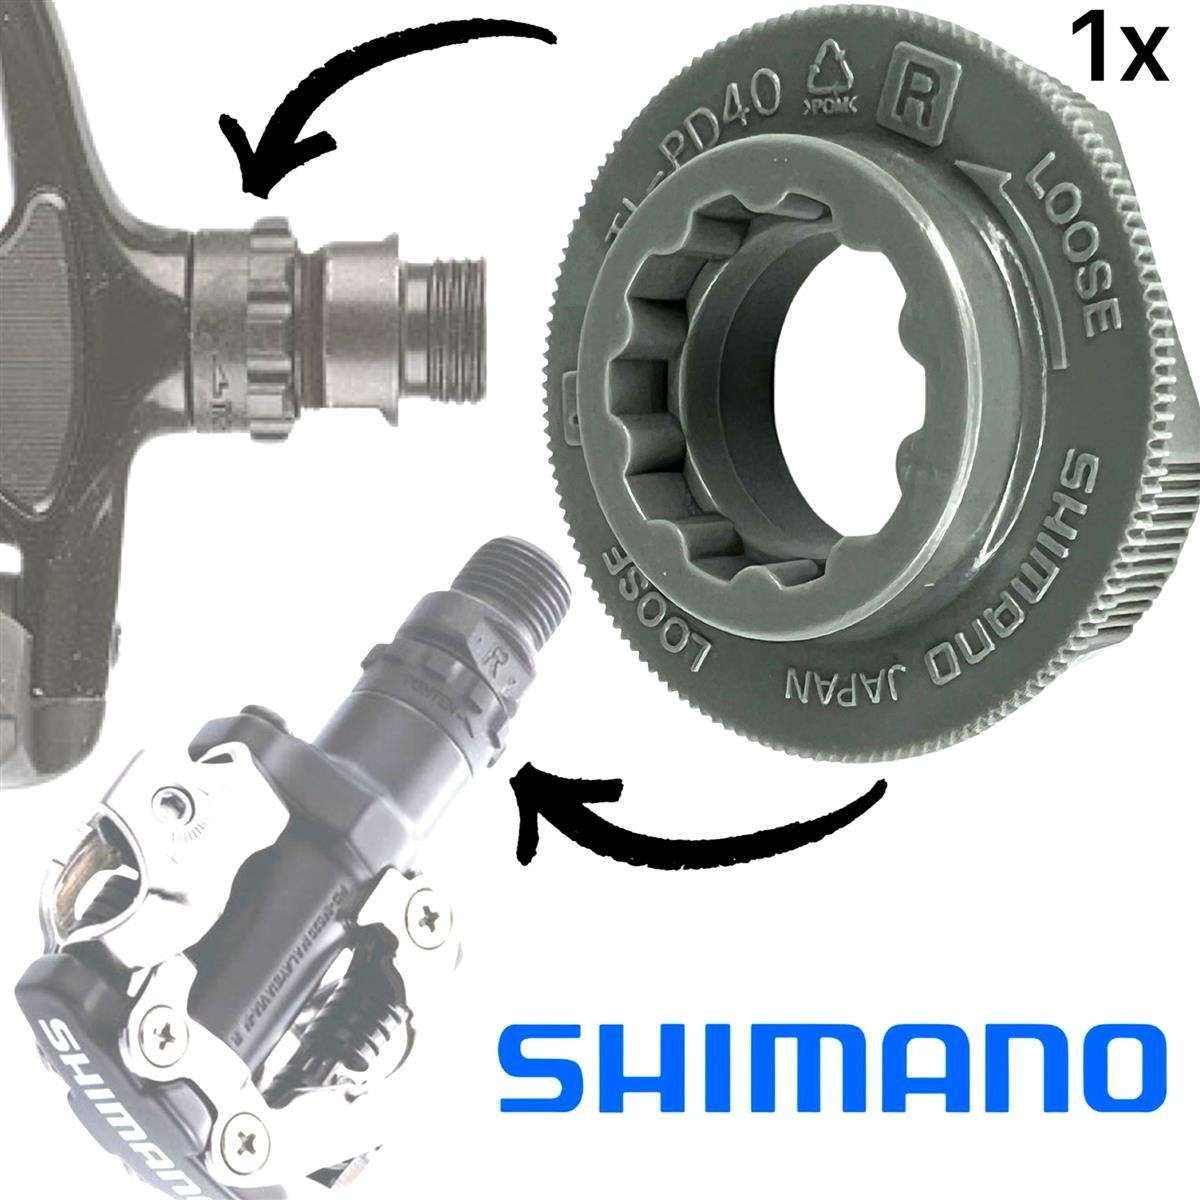 Shimano Fahrrad-Montageständer Shimano Montage & Demontage Werkzeug für Pedalachse TL-PD40